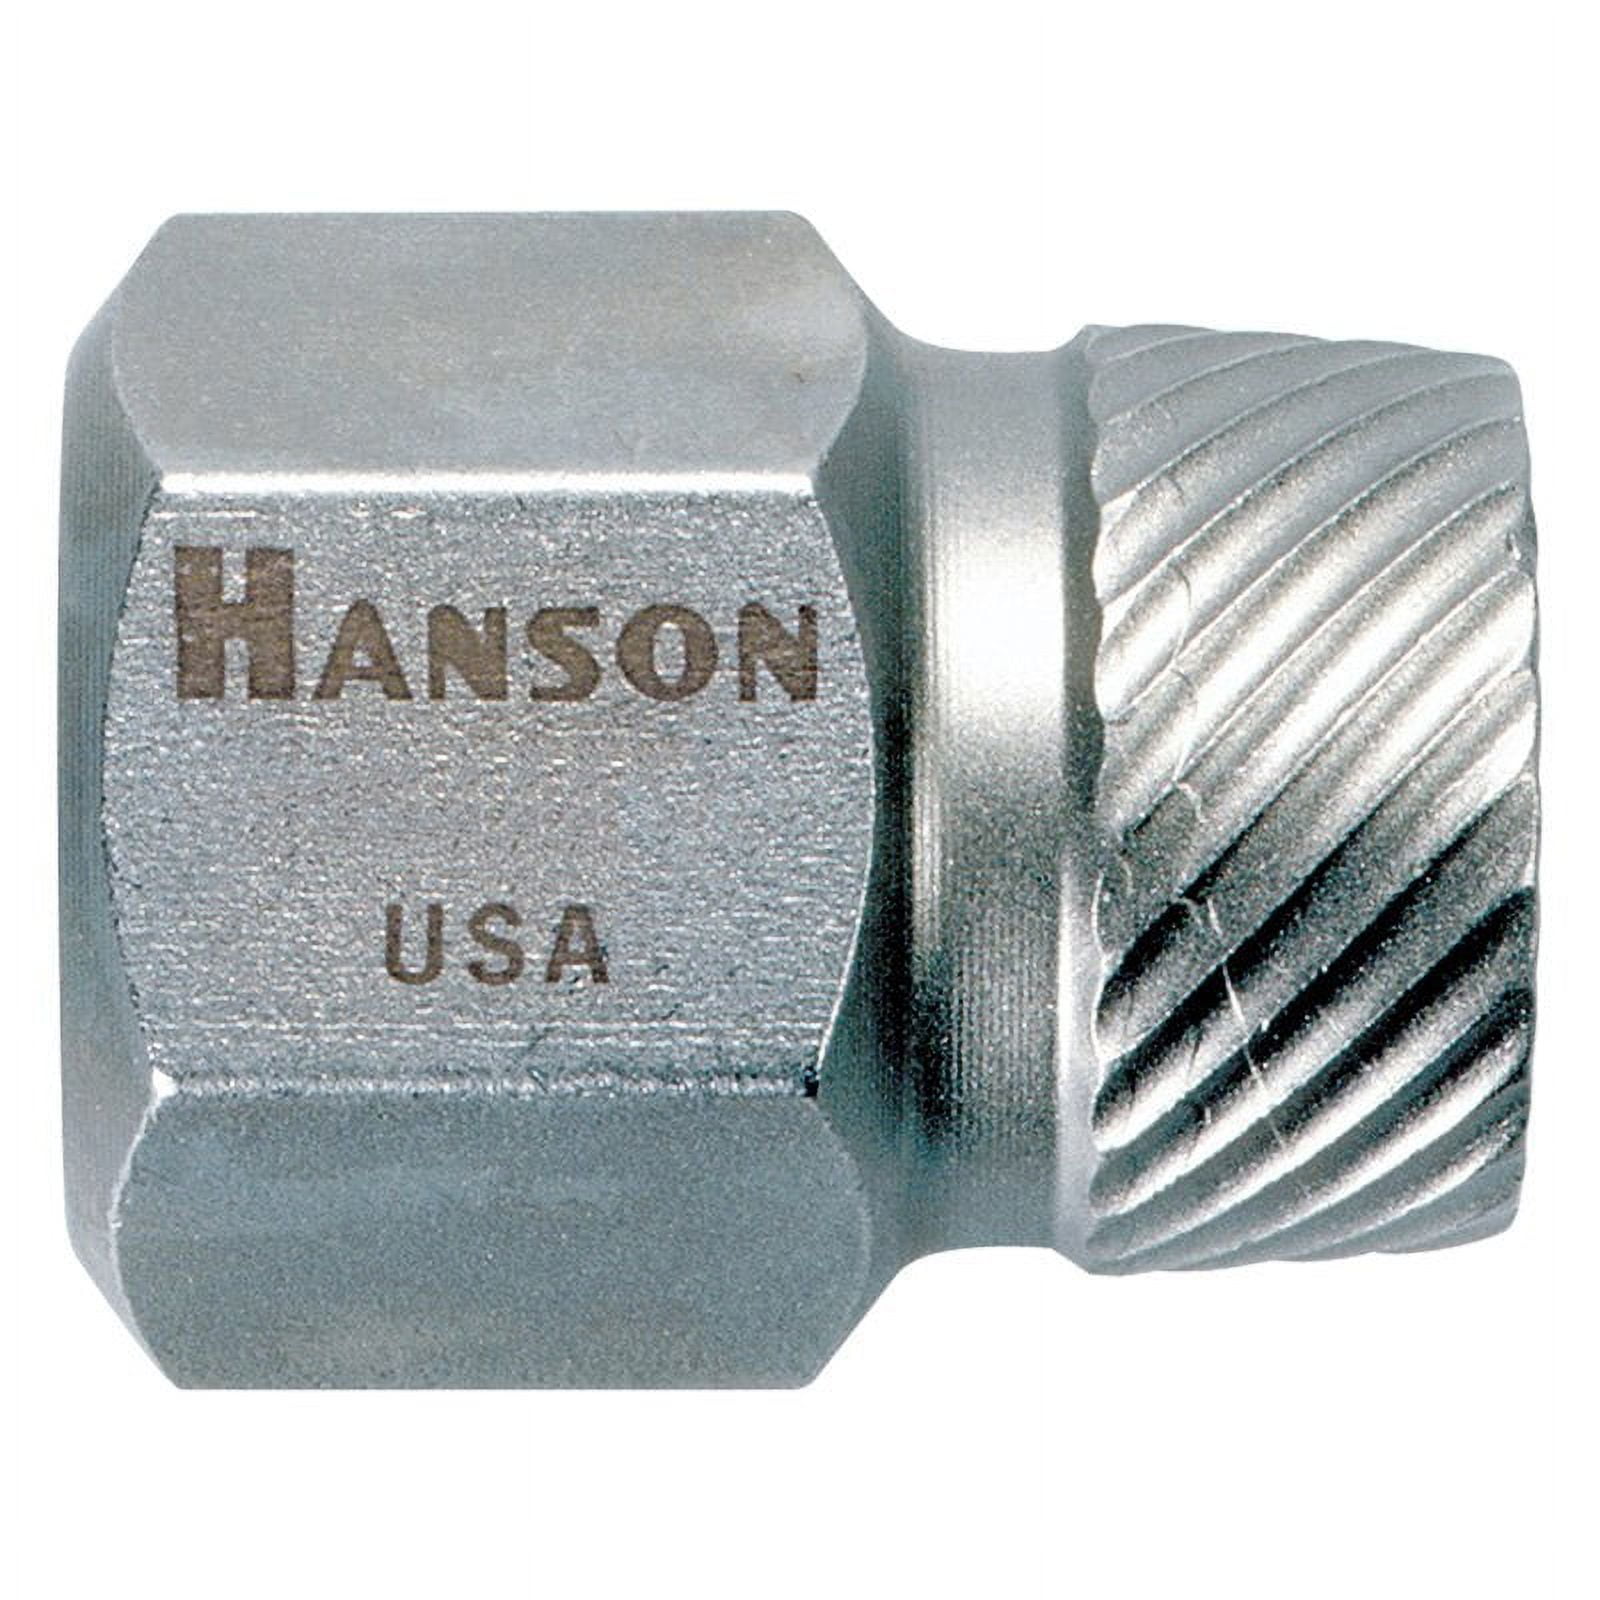 Irwin 52204 - Hanson 522/532 Series 7/32 Multi-Spline Screw Extractor